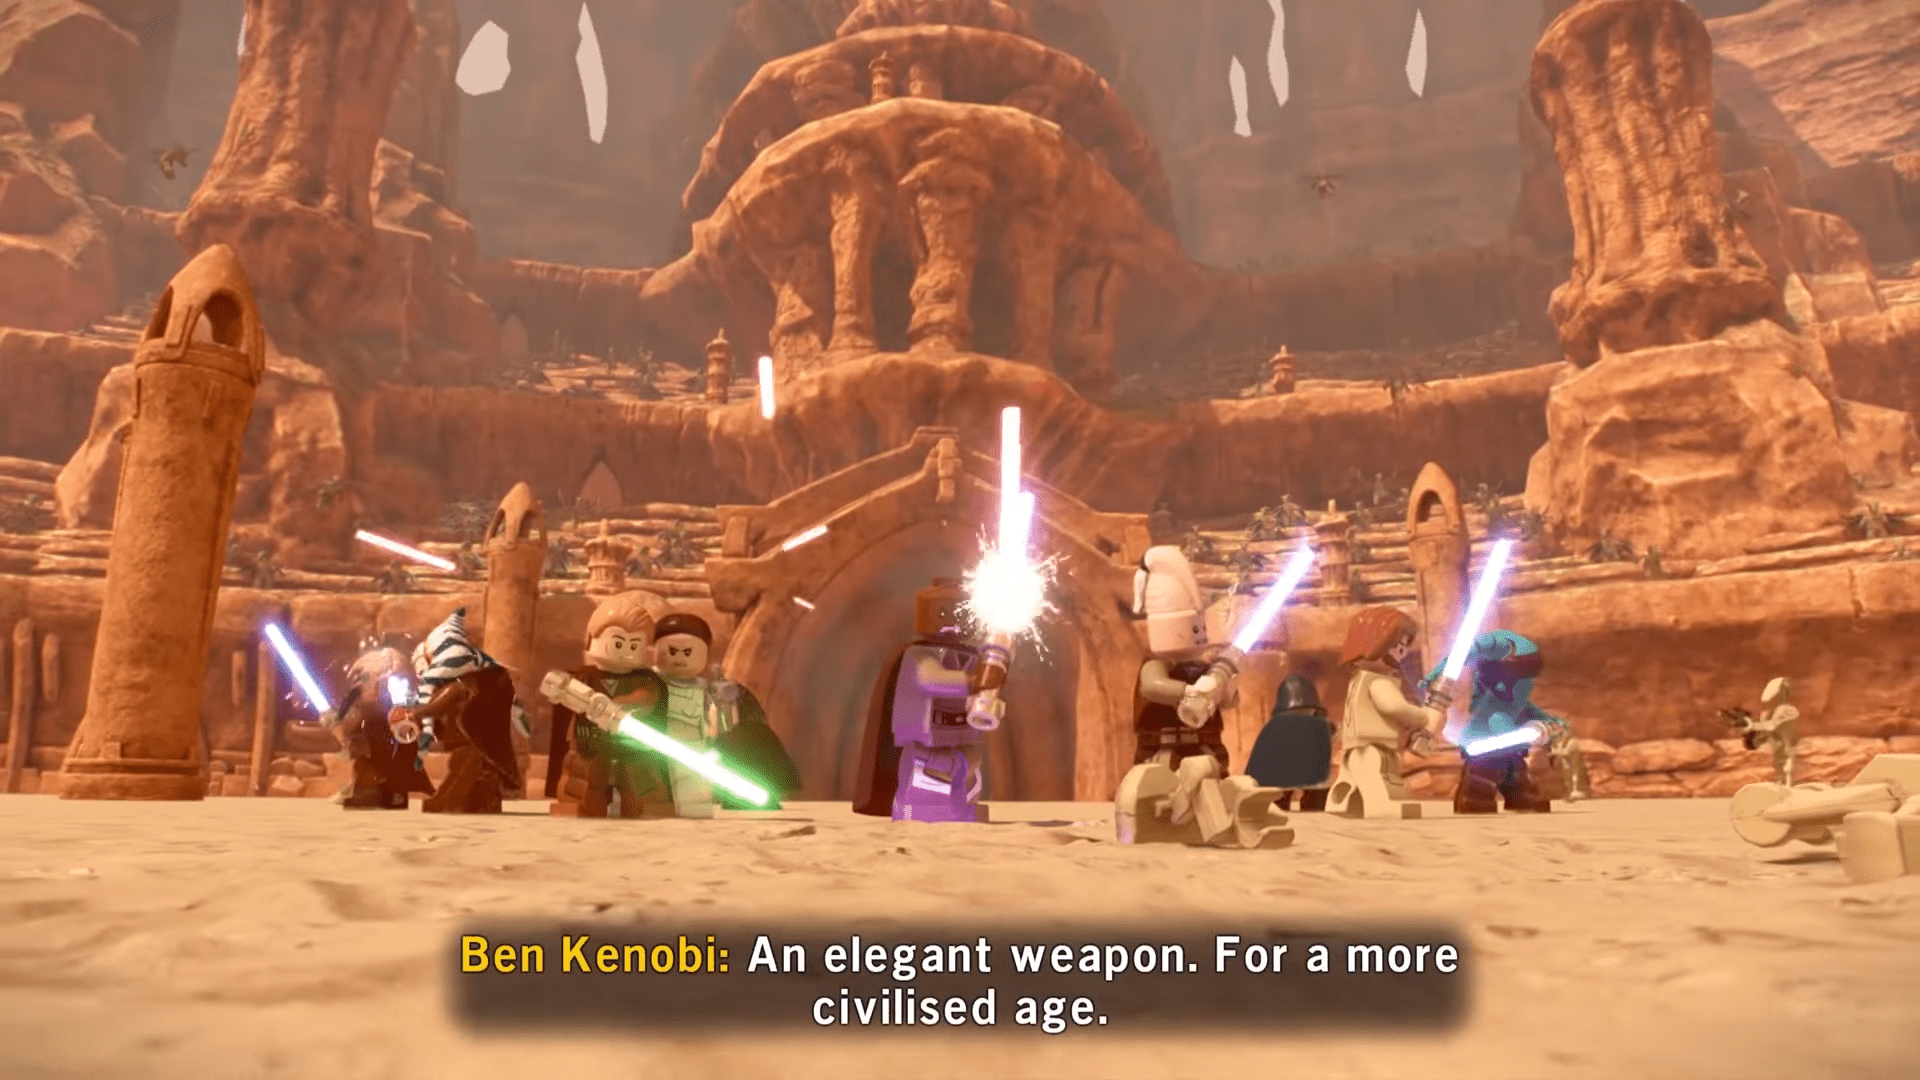 Lego Star Wars Skywalker Saga Codes List for Secret Unlockables